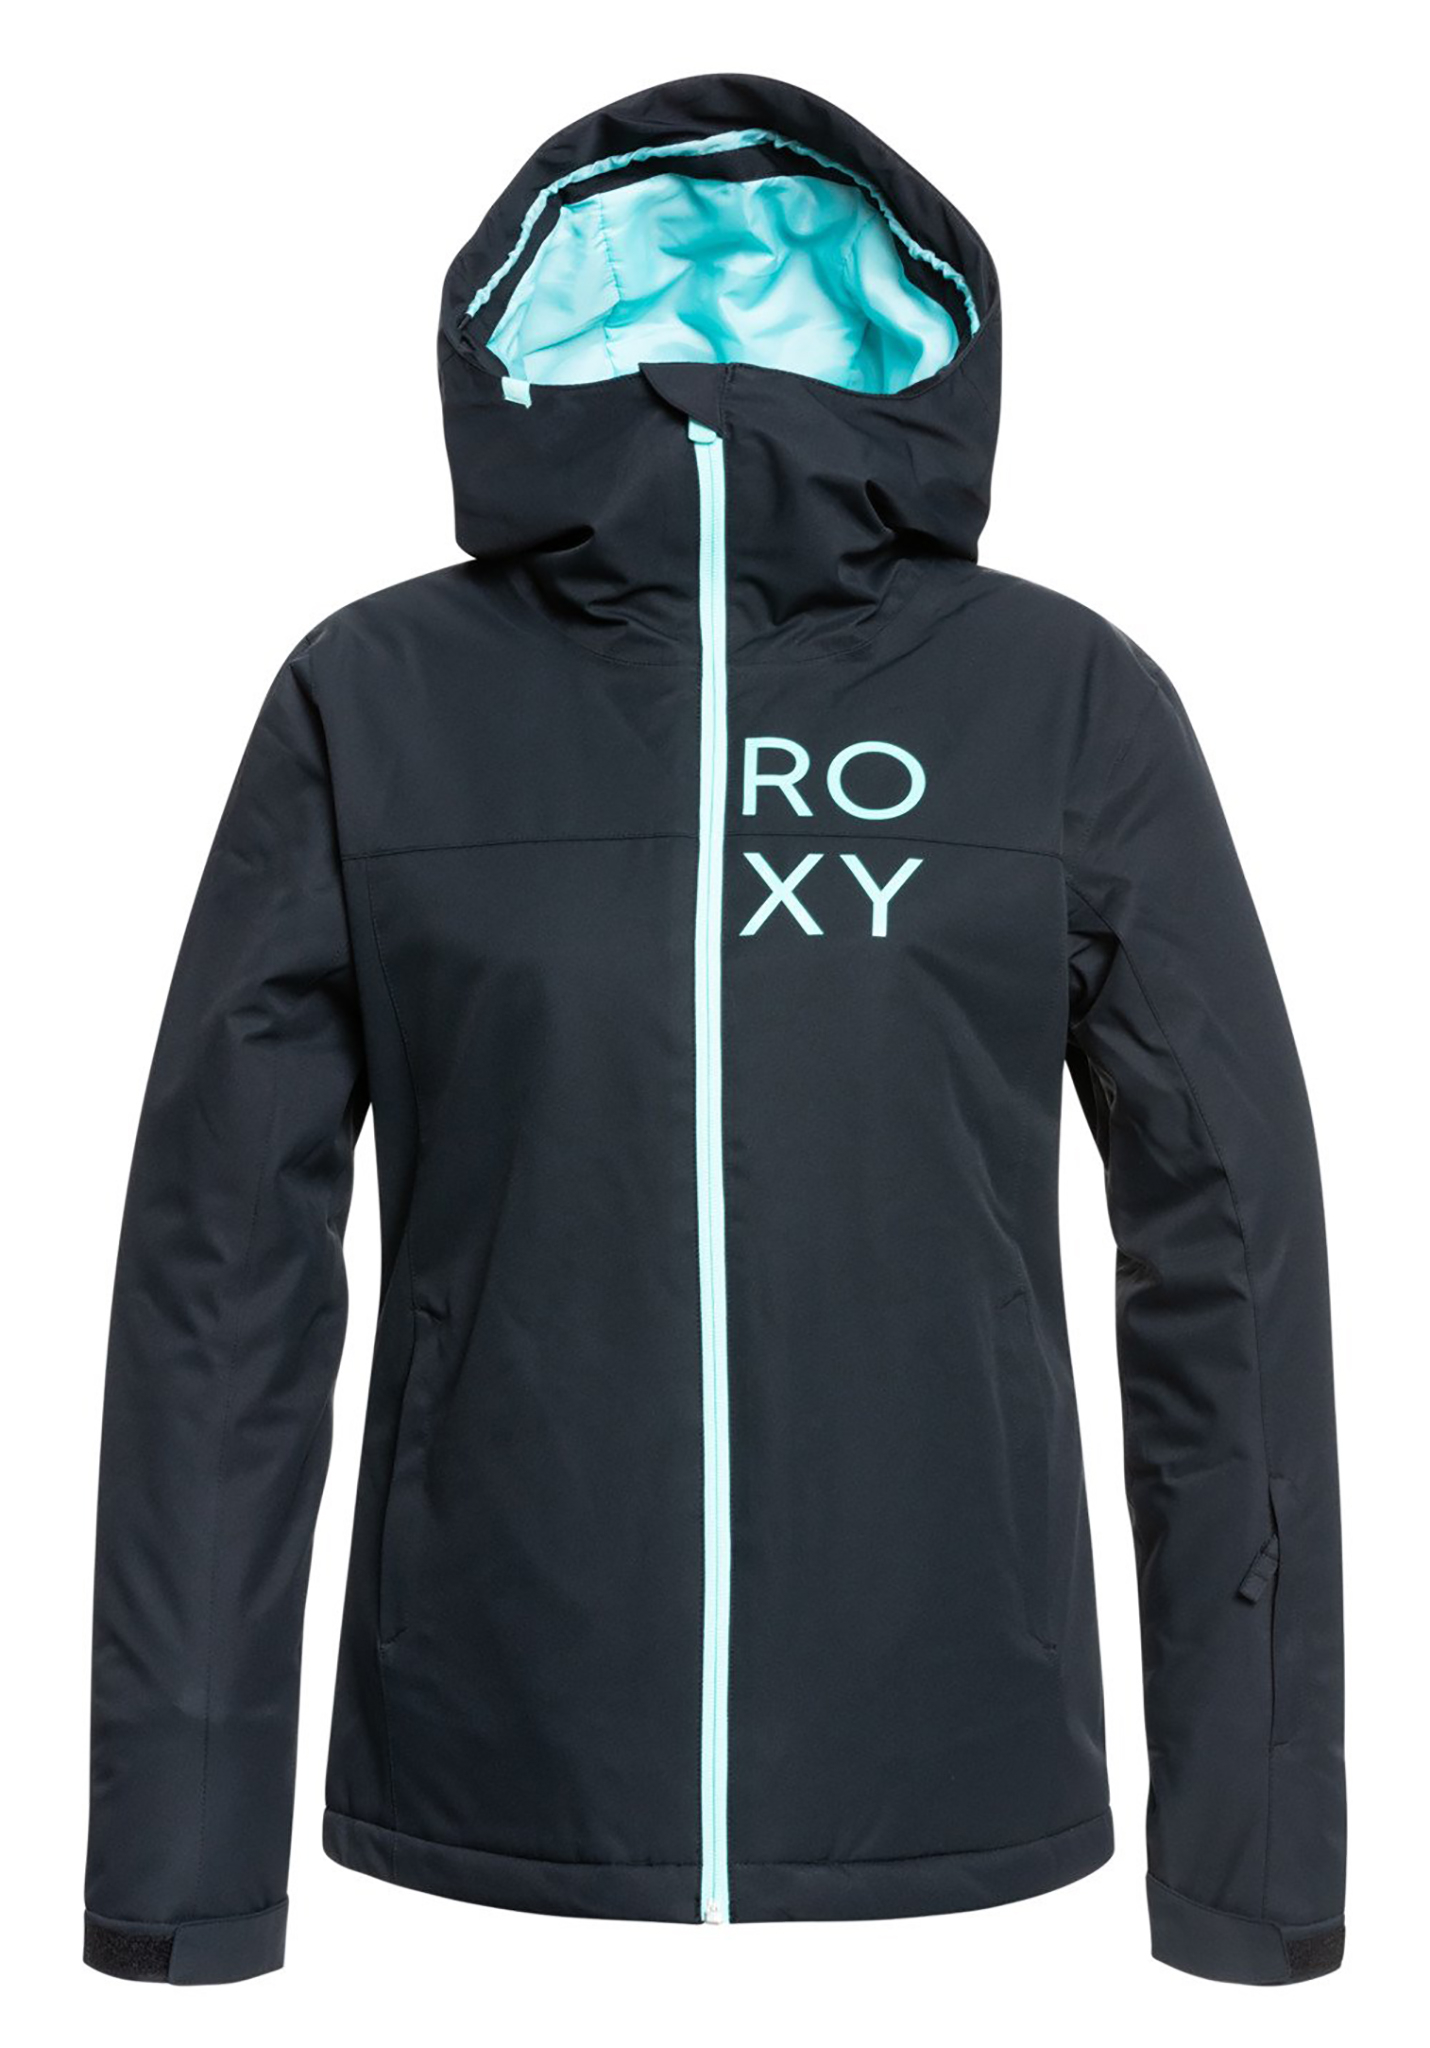 Roxy Galaxy Snowboardjacken true black XS